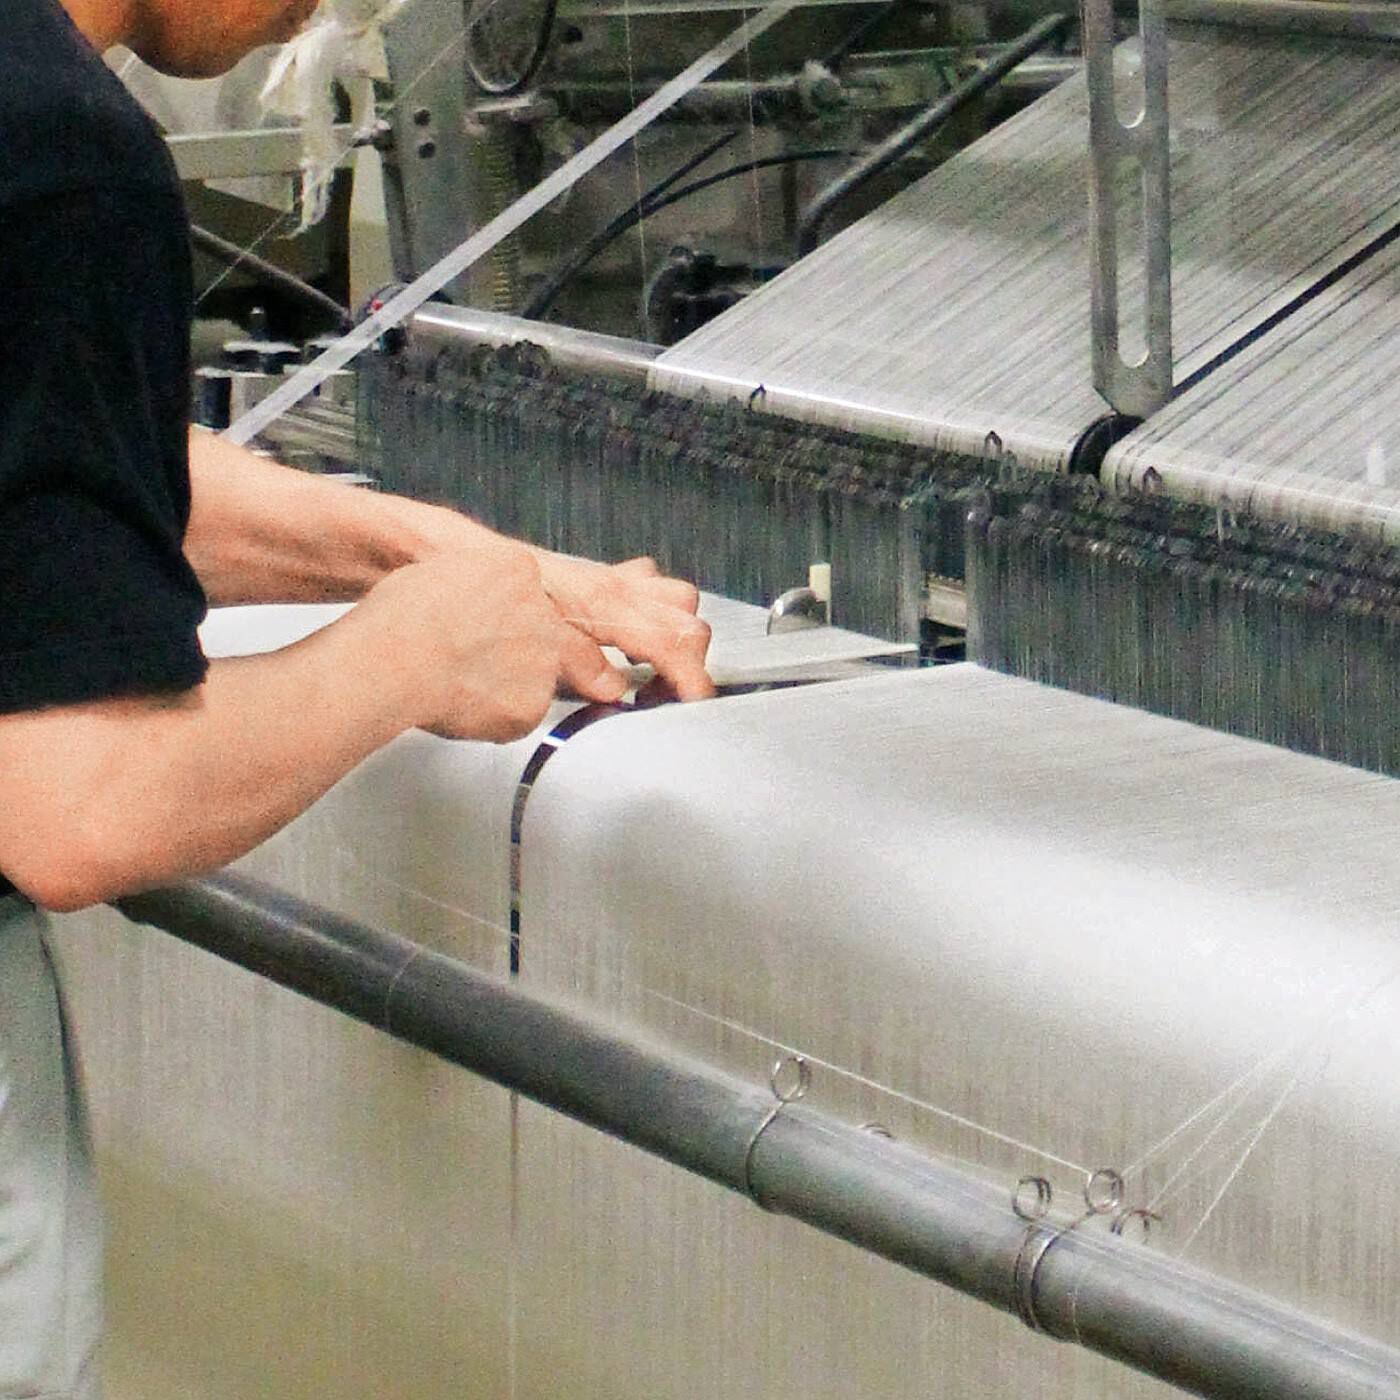 Real Stock|el:ment　ヴィンテージ植物画の世界を日常に　泉州で織り上げたコットン100％　ふんわり5重織りガーゼケット|タオルづくりが盛んな大阪・泉州地方で生産しています。約9，700本以上の糸を職人の手でセットし、織り上げています。